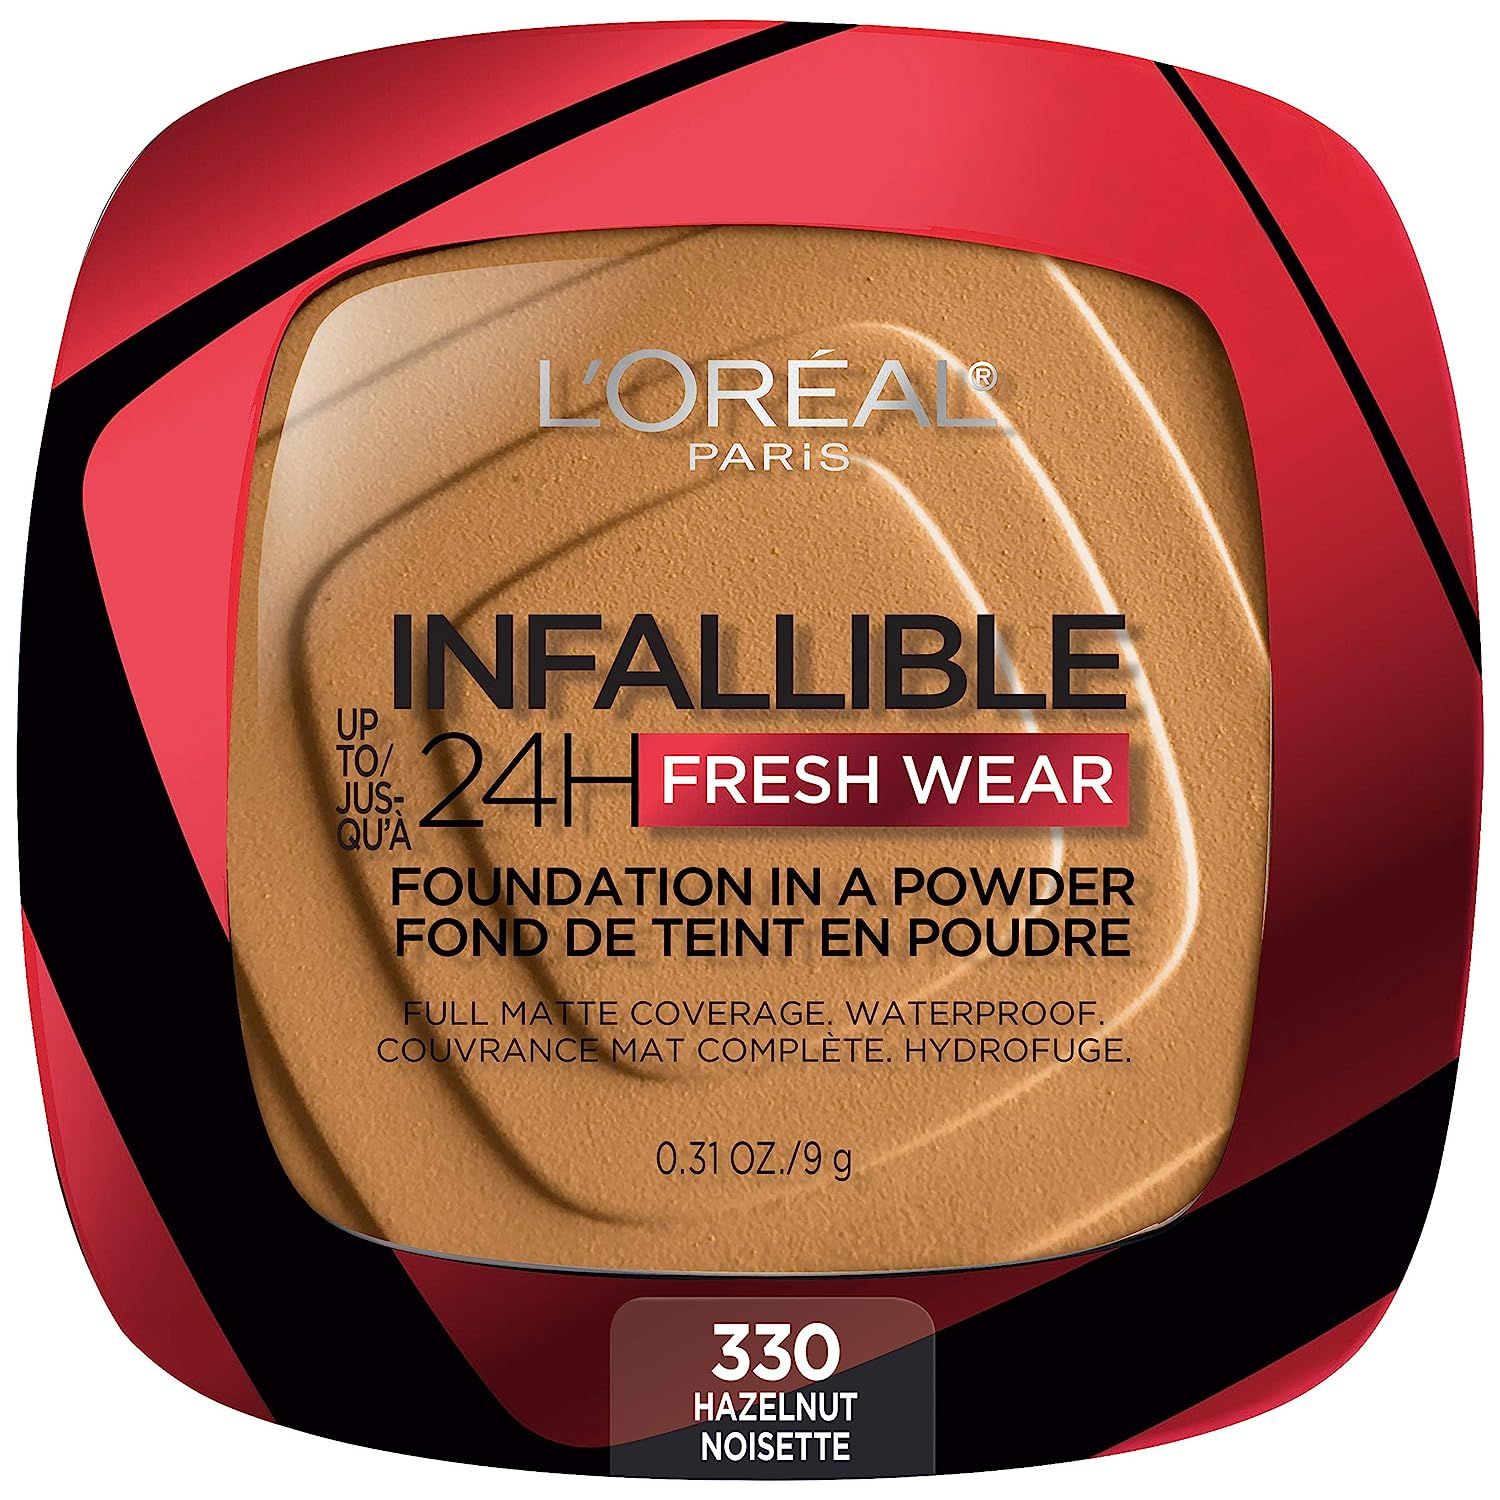 L'Oreal Paris Infallible Fresh Wear Foundation in a Powder, Up to 24H Wear, Hazelnut, 0.31 oz. | Amazon (US)